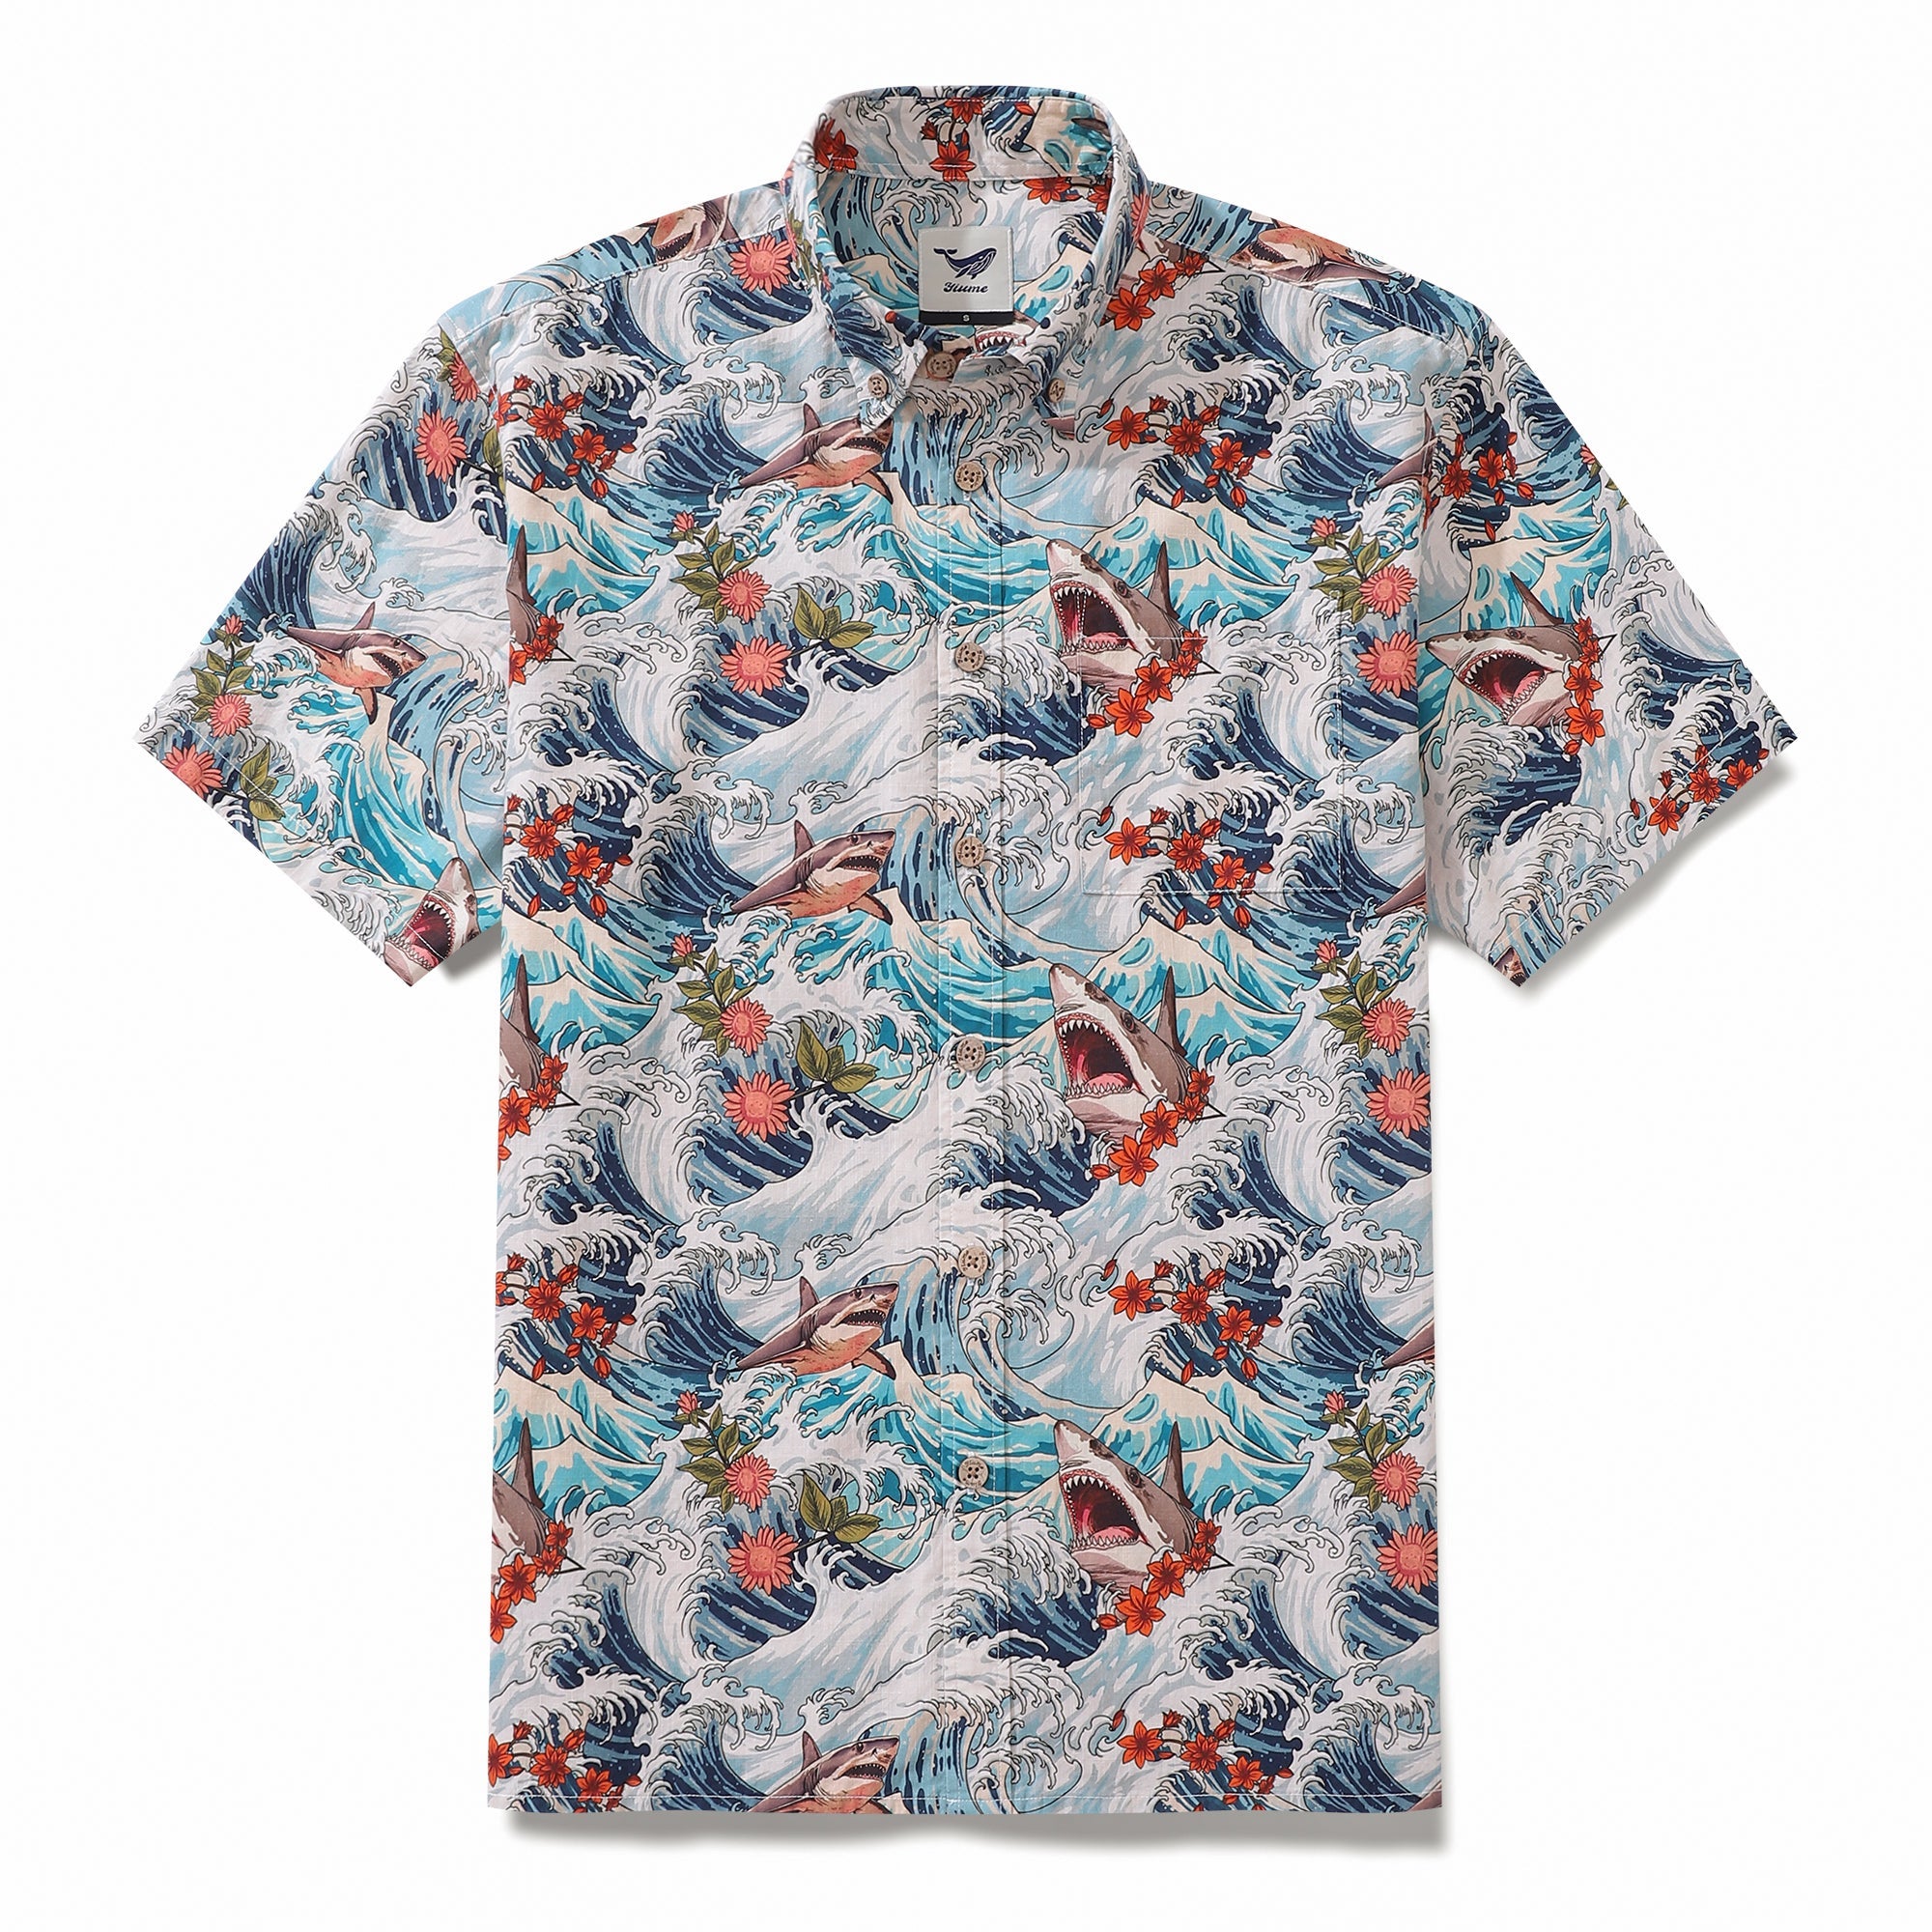 Men's Hawaiian Shirt Turbulence at Sea with Sharks Print Cotton Button ...